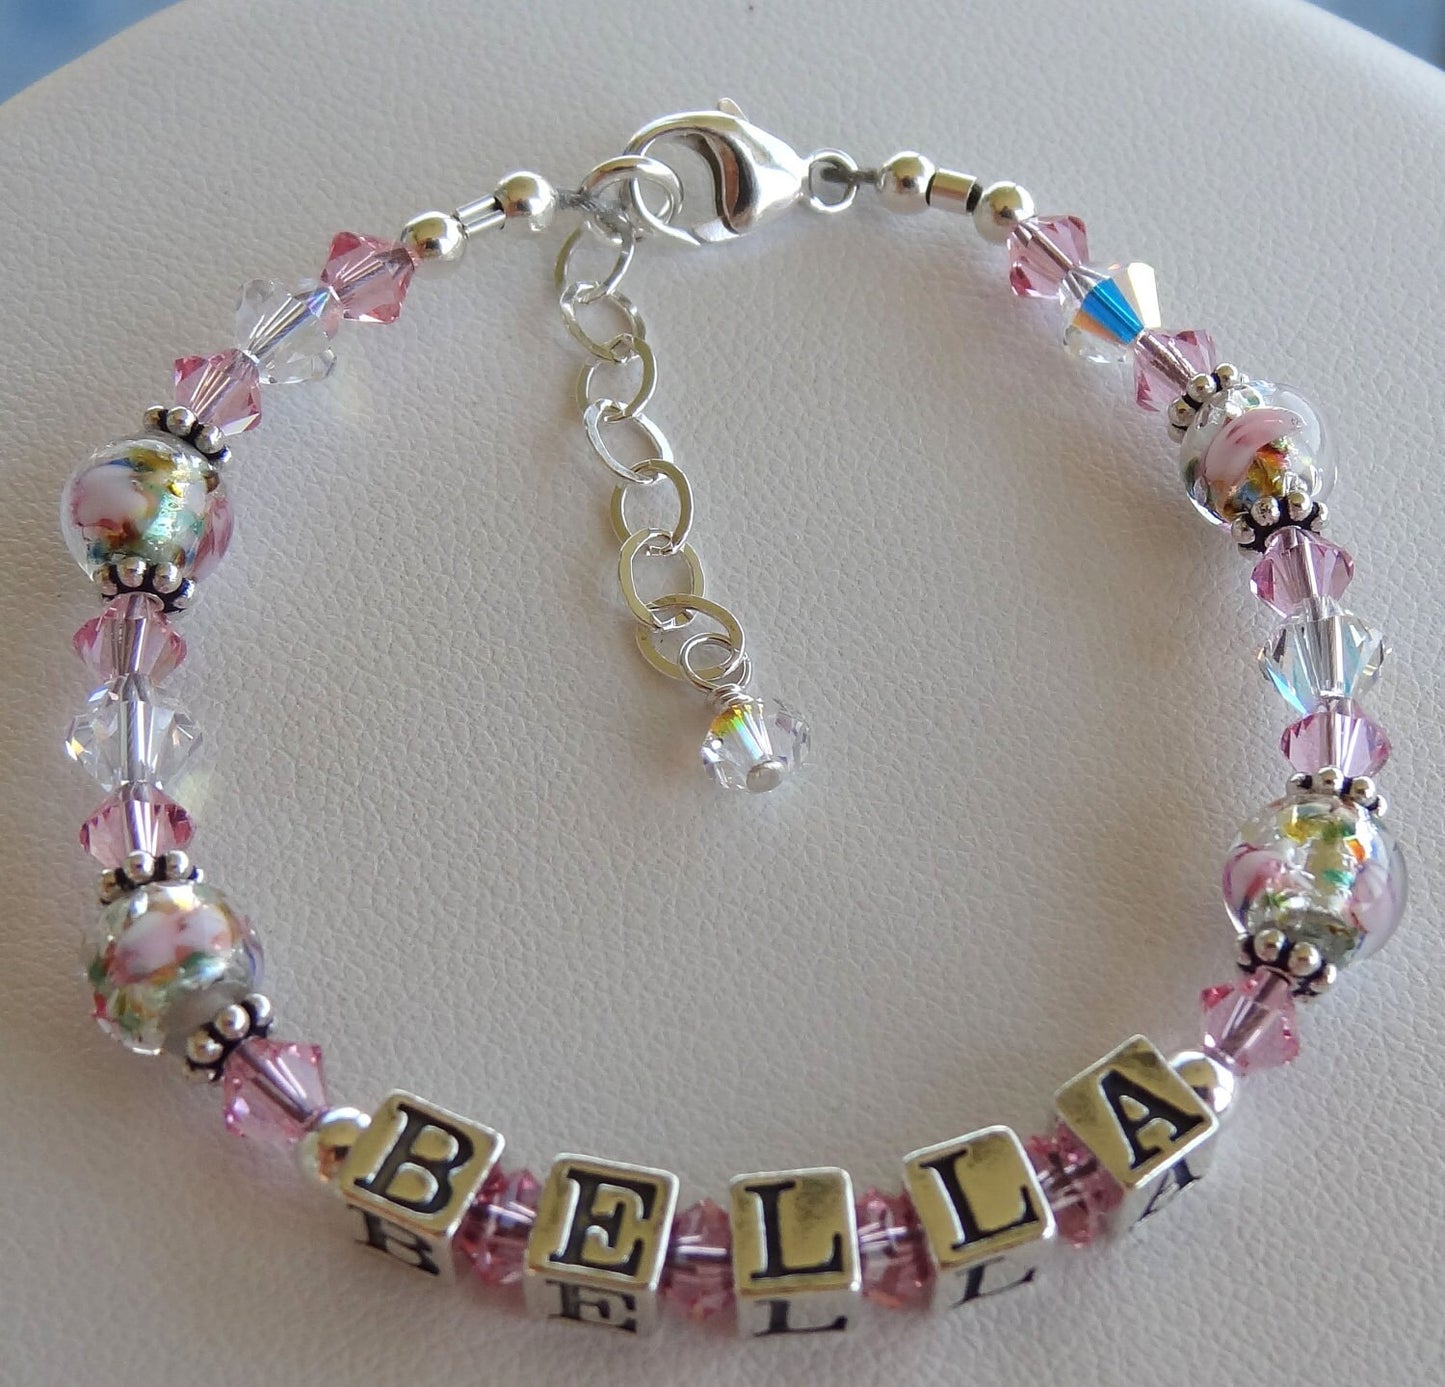 Personalized Charm Bracelets for Kids - BeadifulBABY